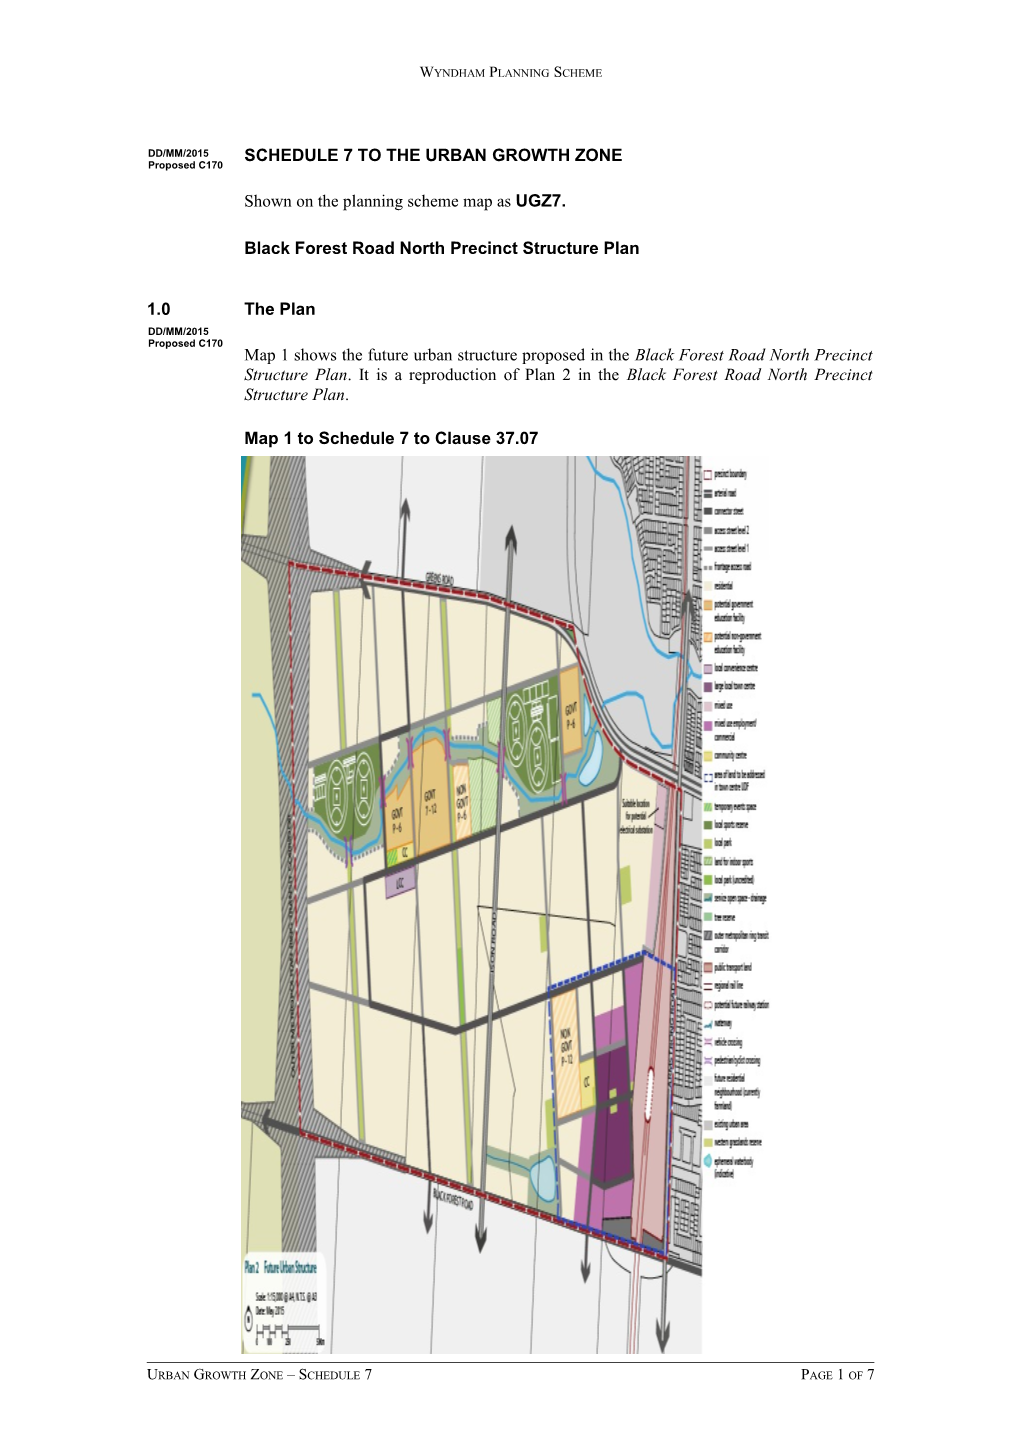 Black Forest Road North Precinct Structure Plan